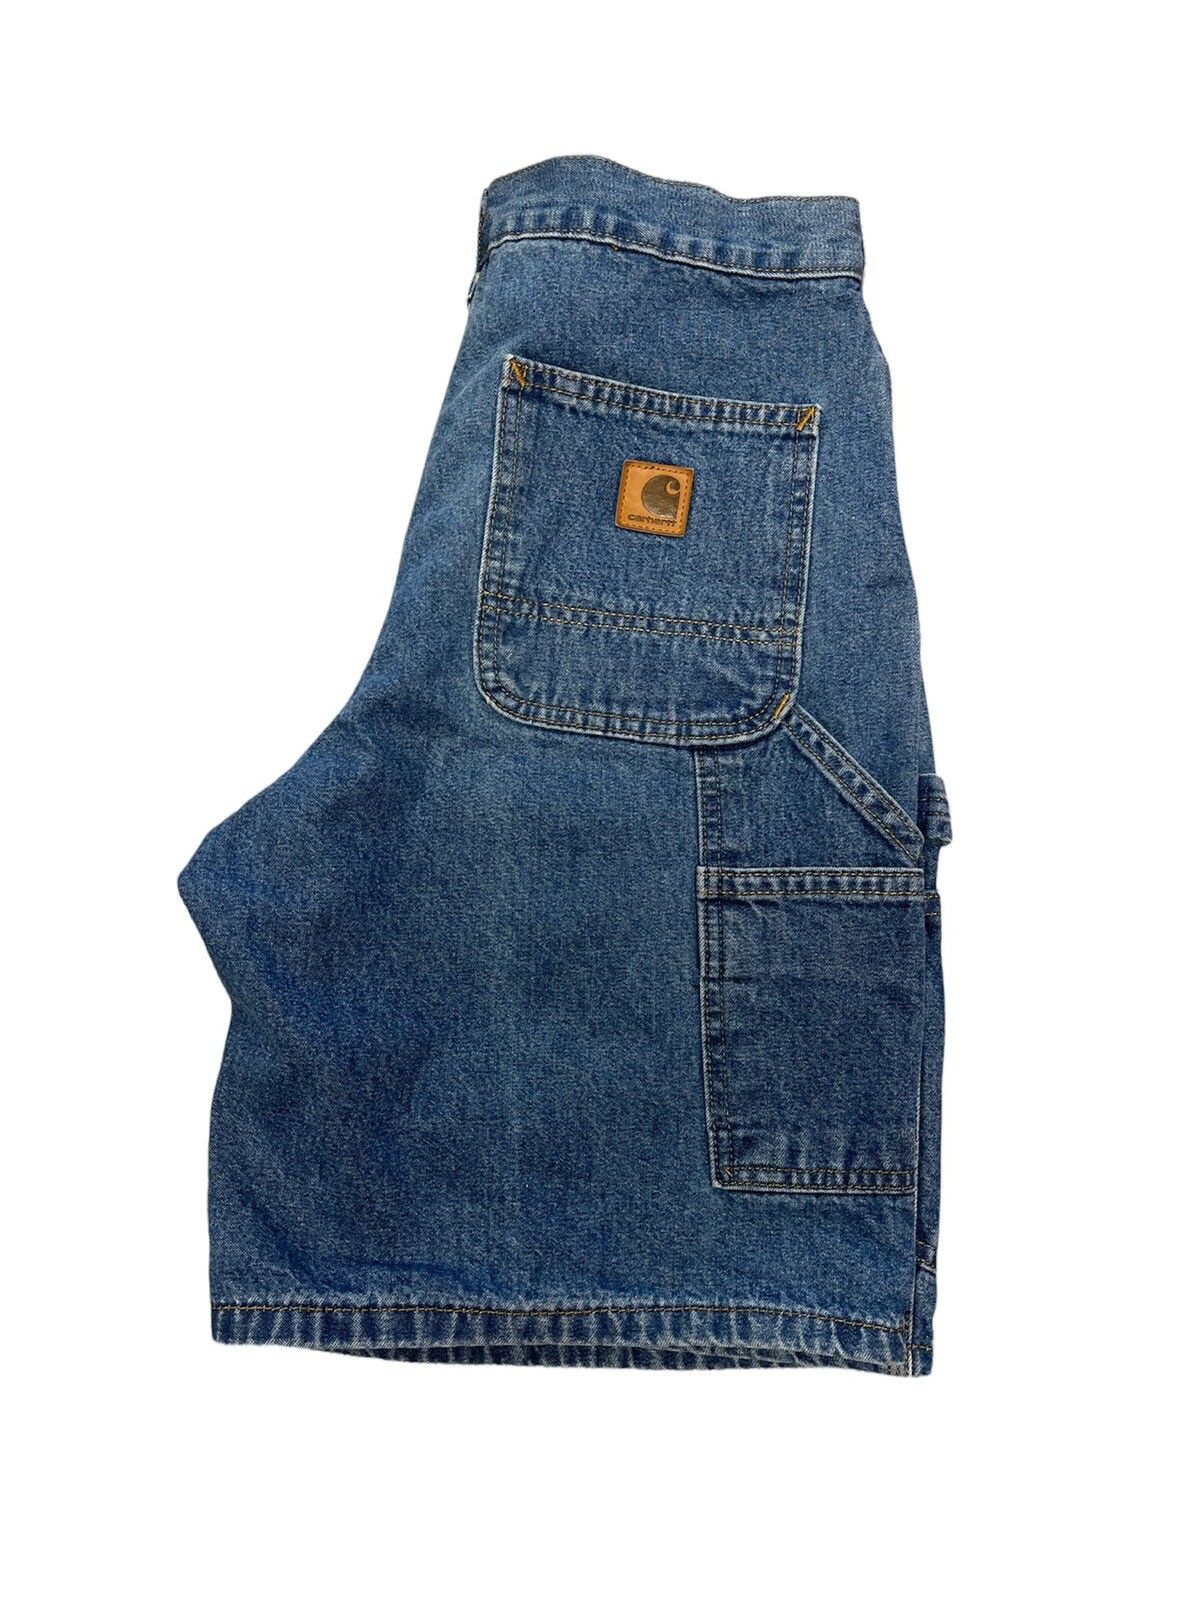 Vintage Vintage Carhartt Denim Shorts (Jorts) - Size 30 Size US 30 / EU 46 - 1 Preview